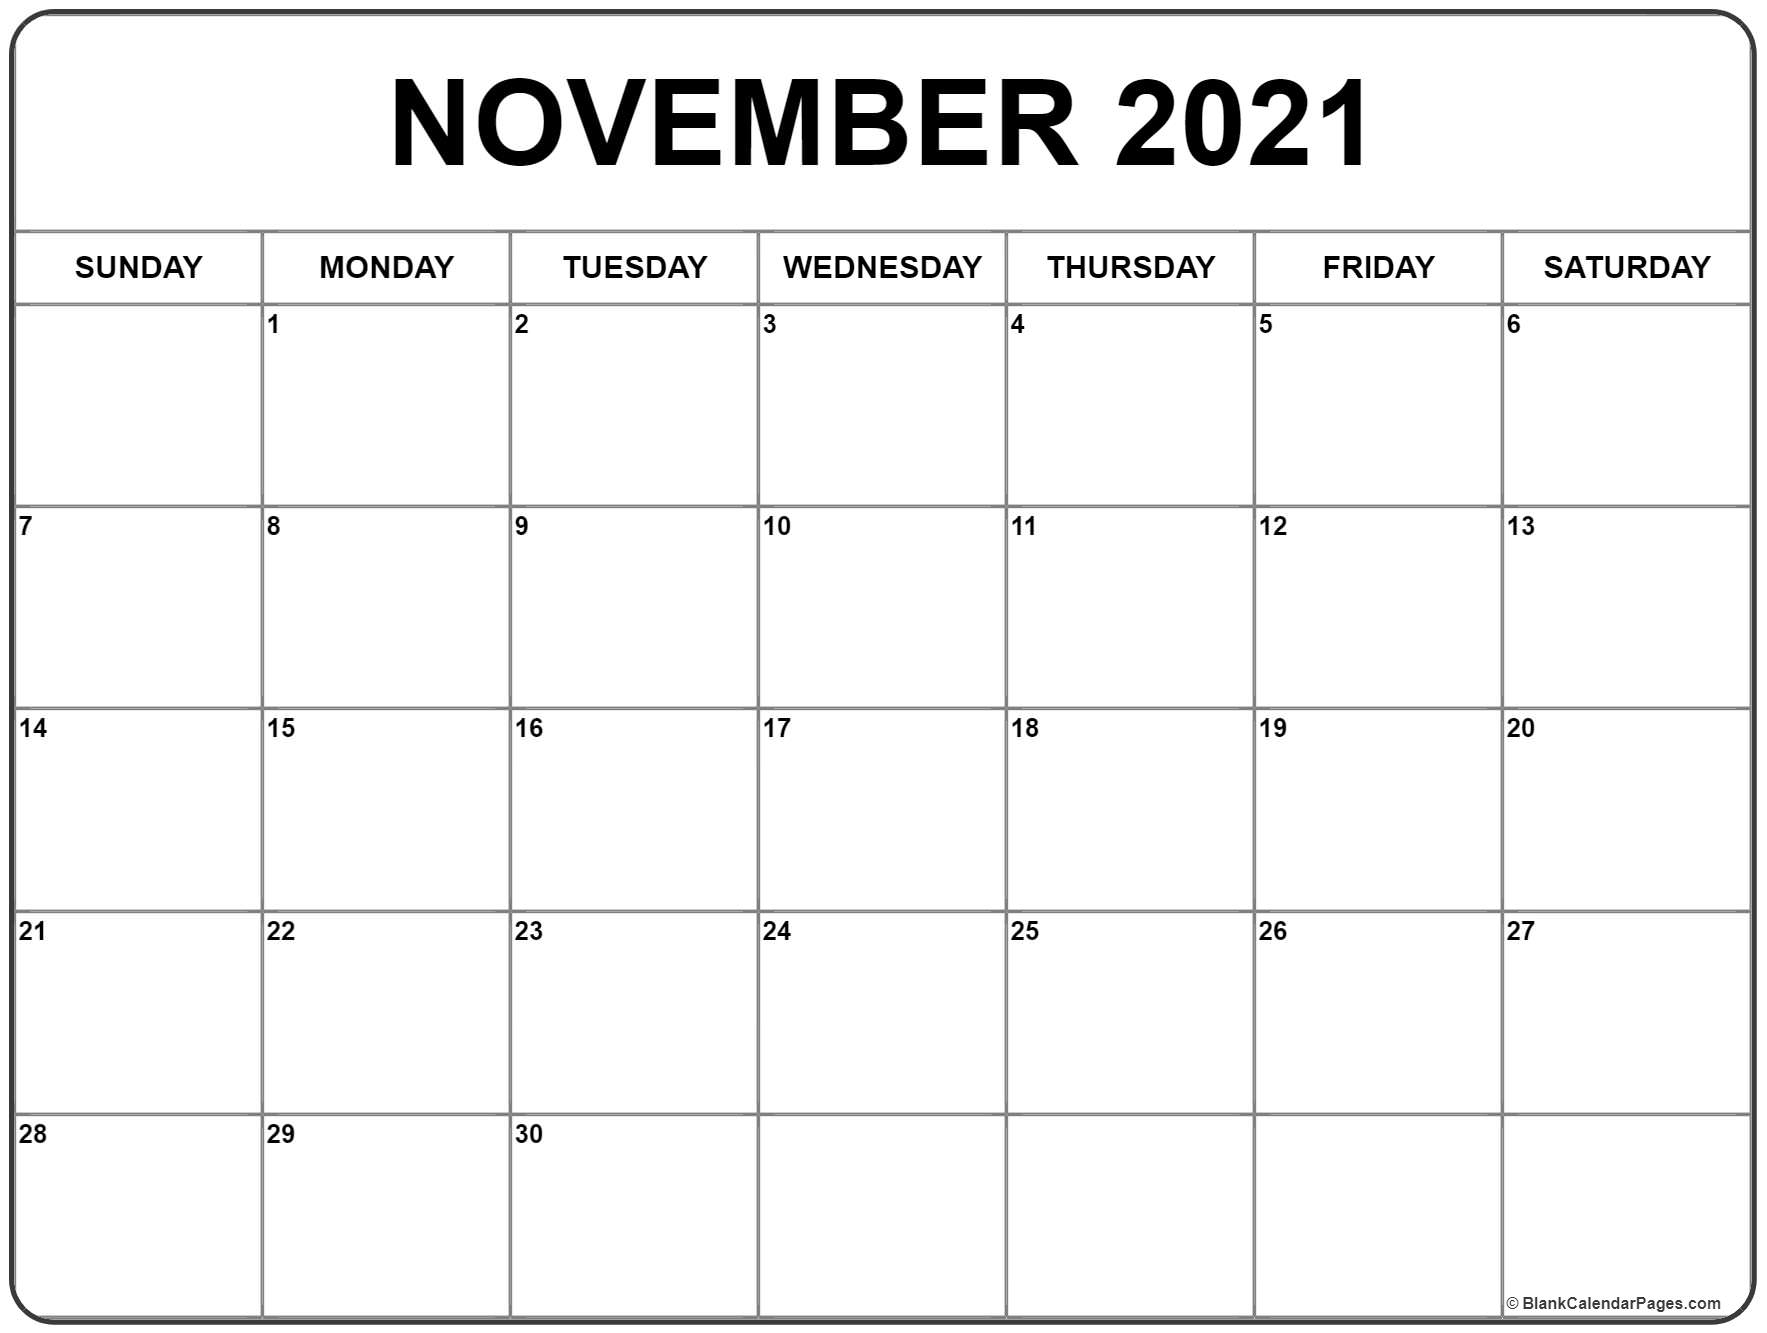 November 2021 Calendar Printable | Avnitasoni within November 2022 Calendar Word Avnitasoni